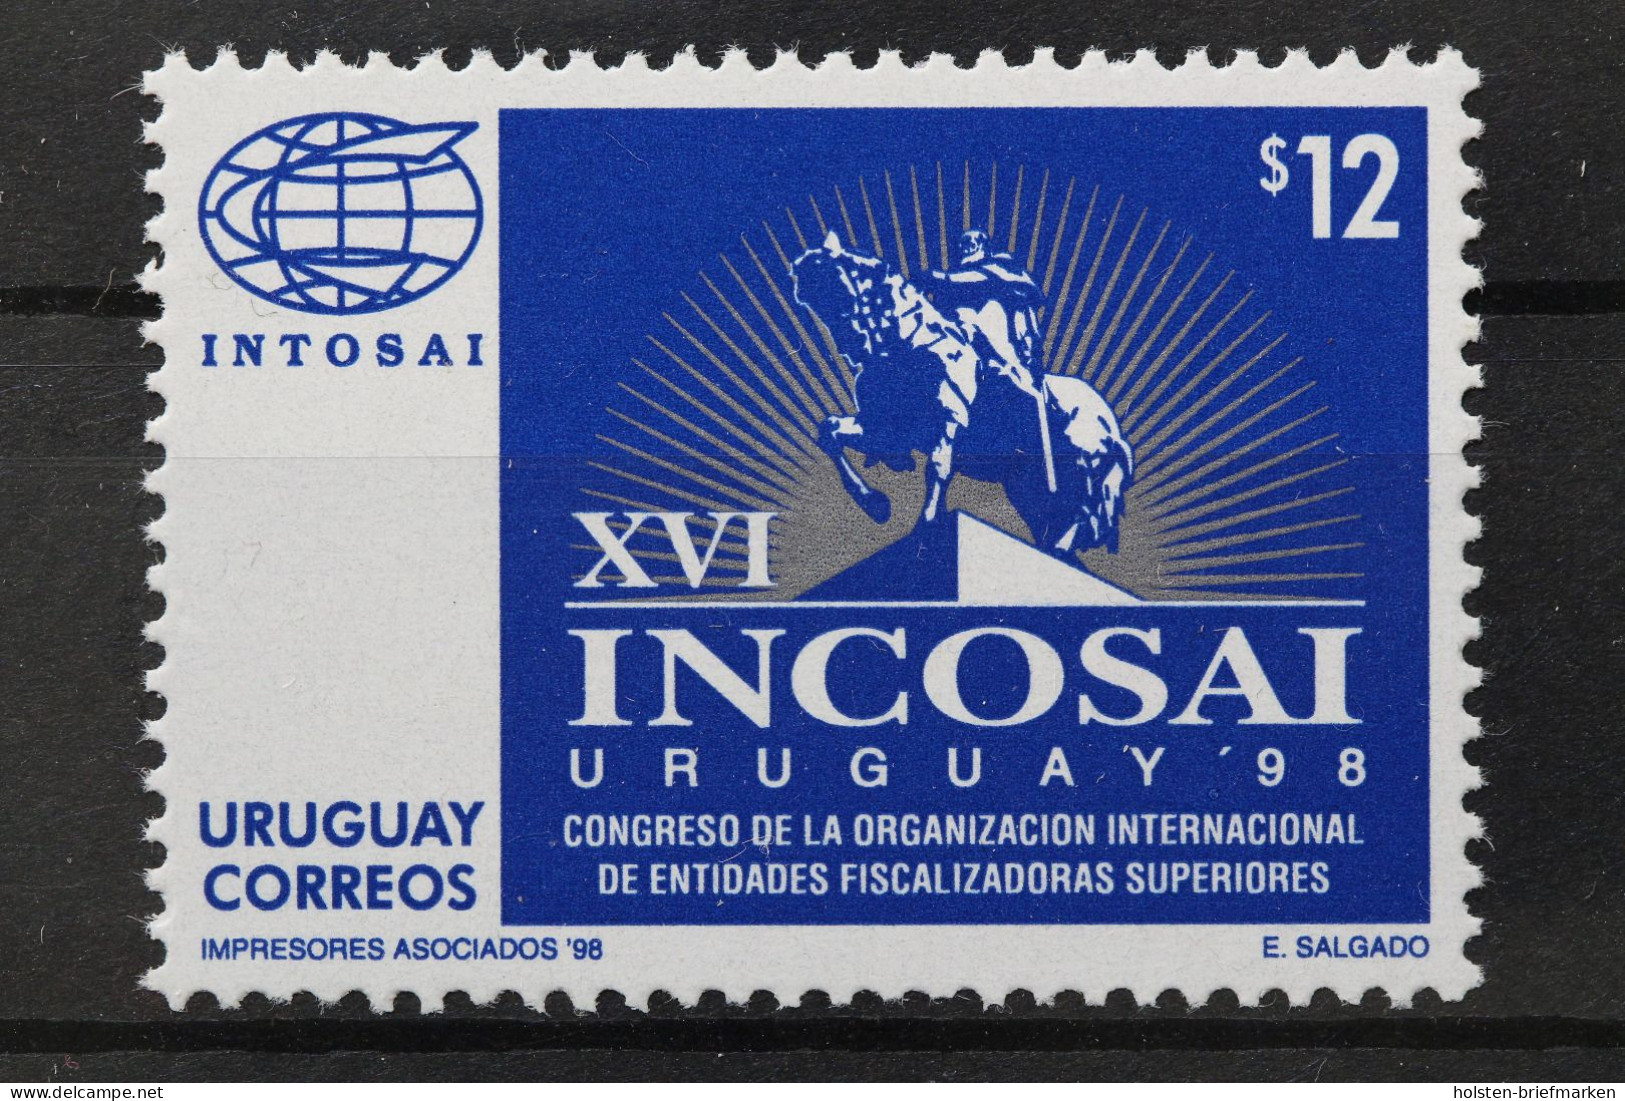 Uruguay, MiNr. 2410, Postfrisch - Uruguay